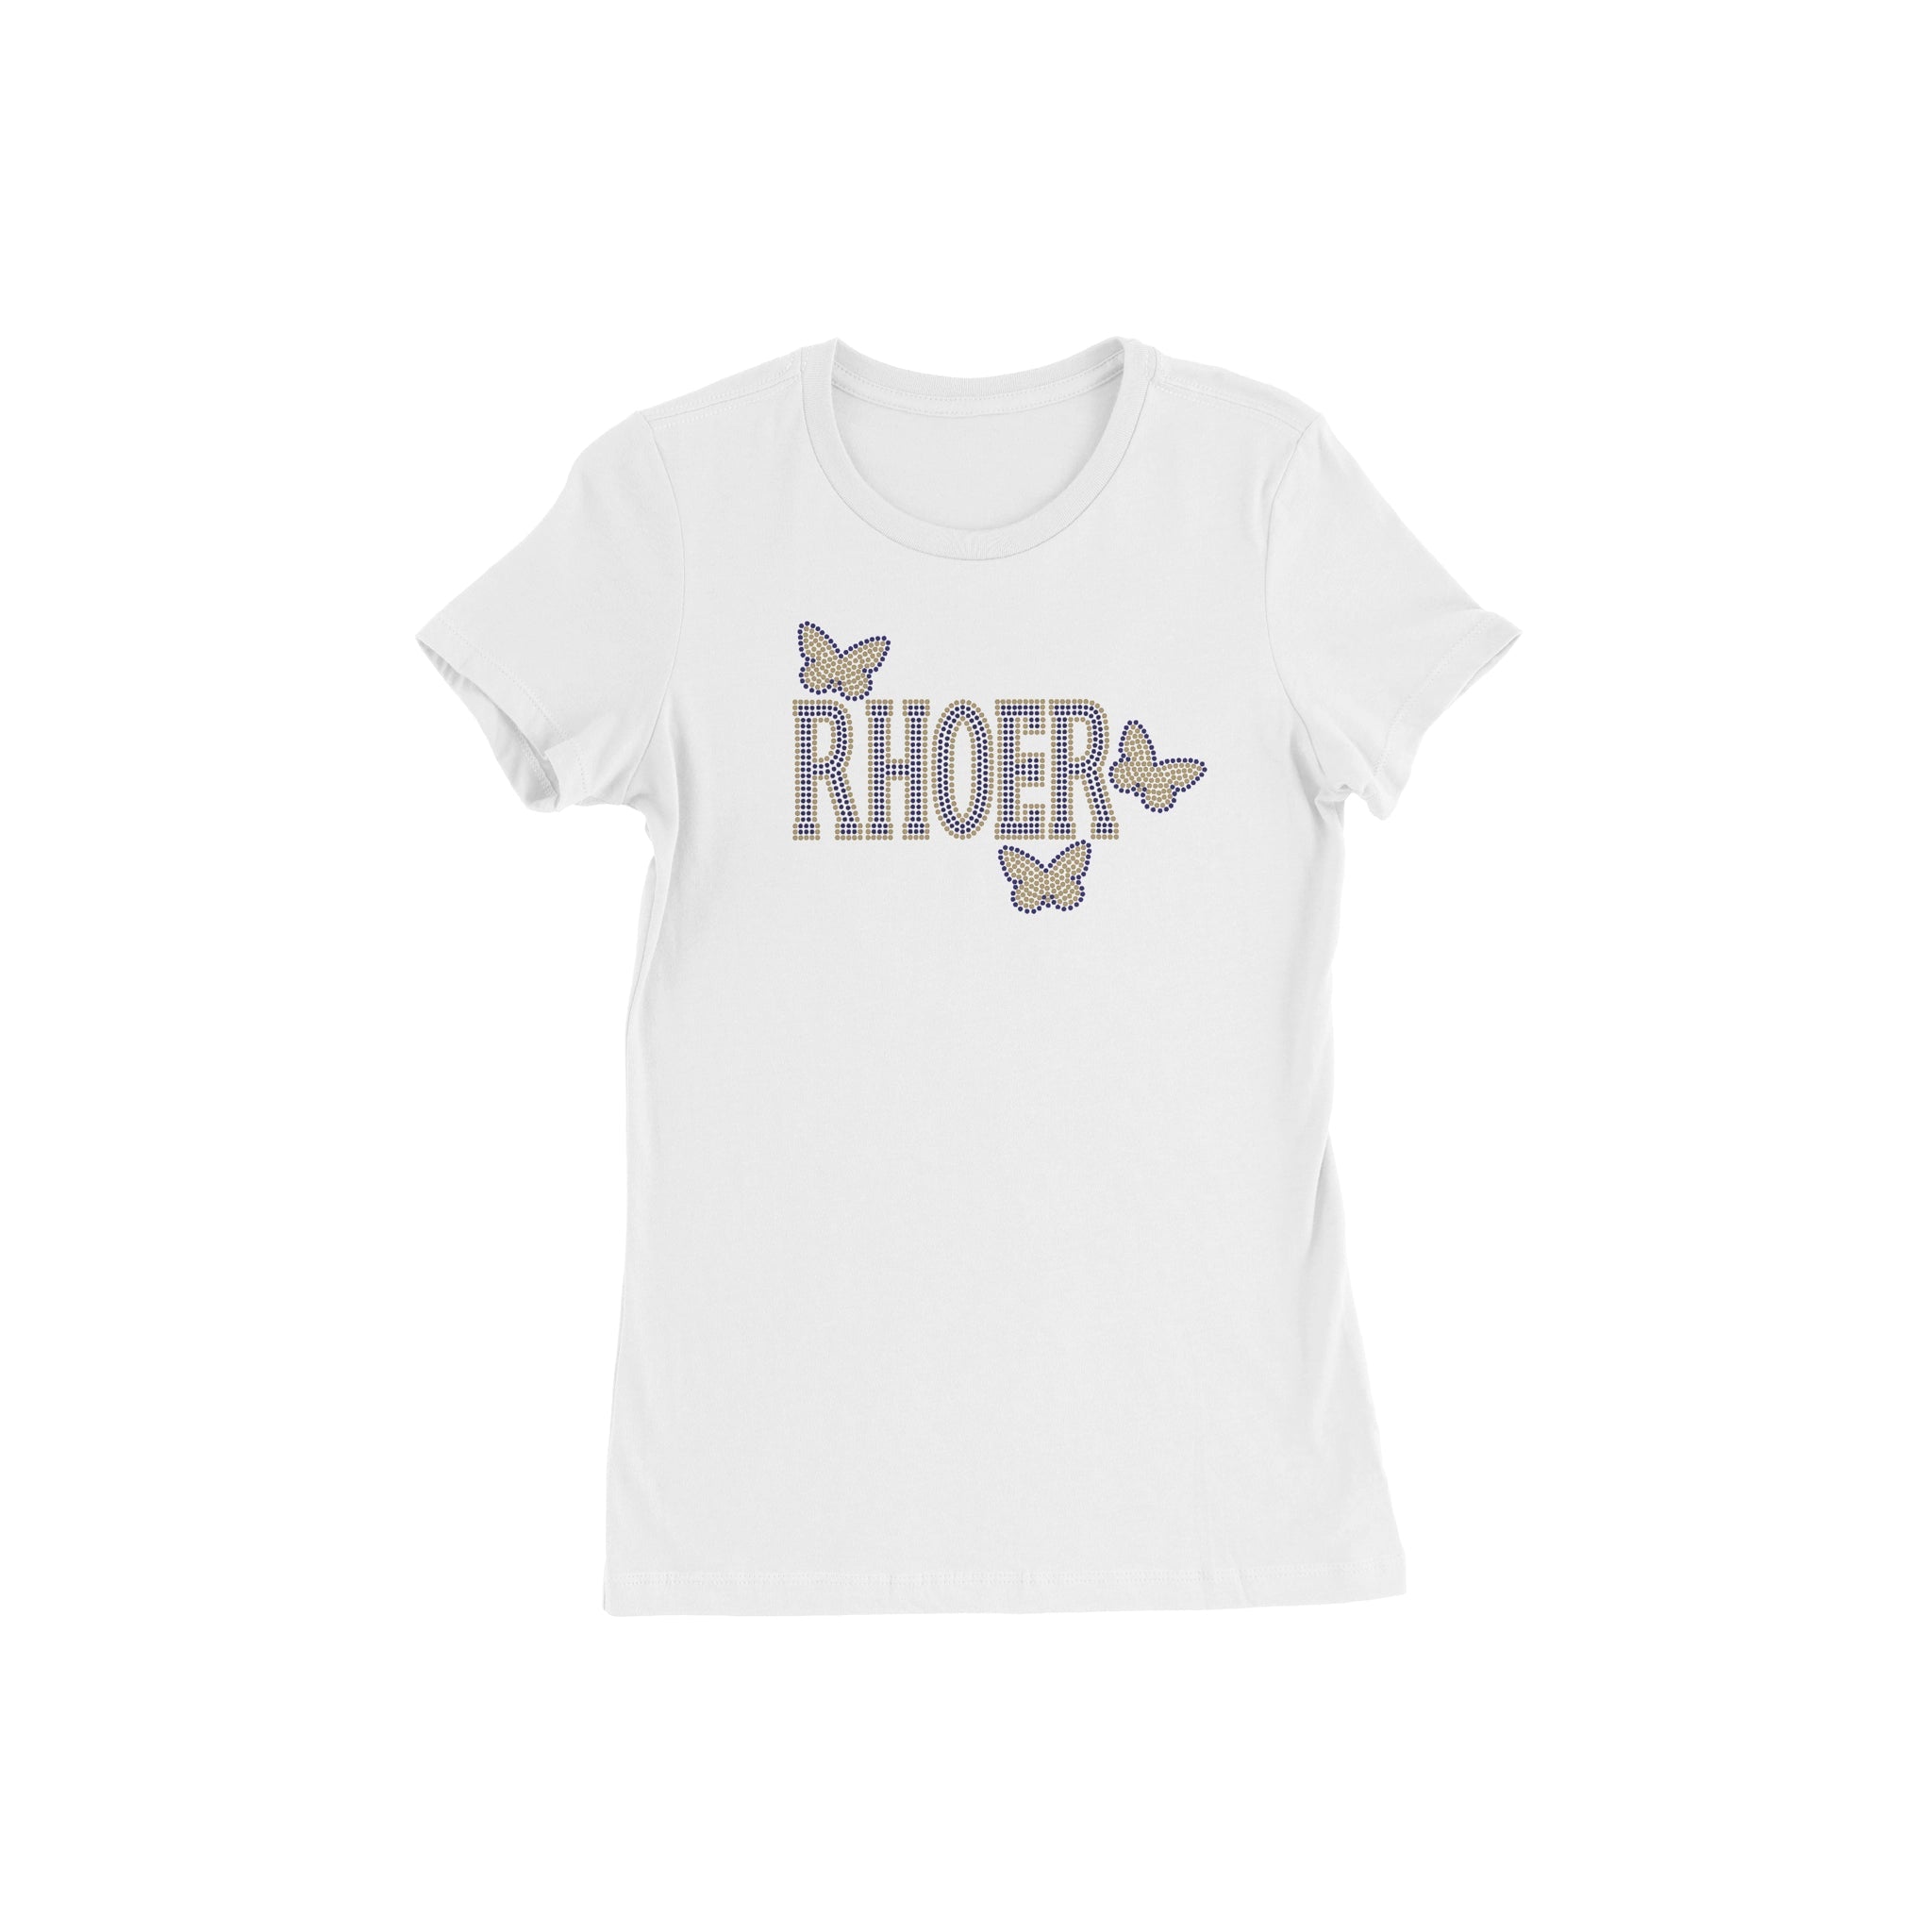 White Rhoer Butterfly T - Shirt - Diva Starr Boutique